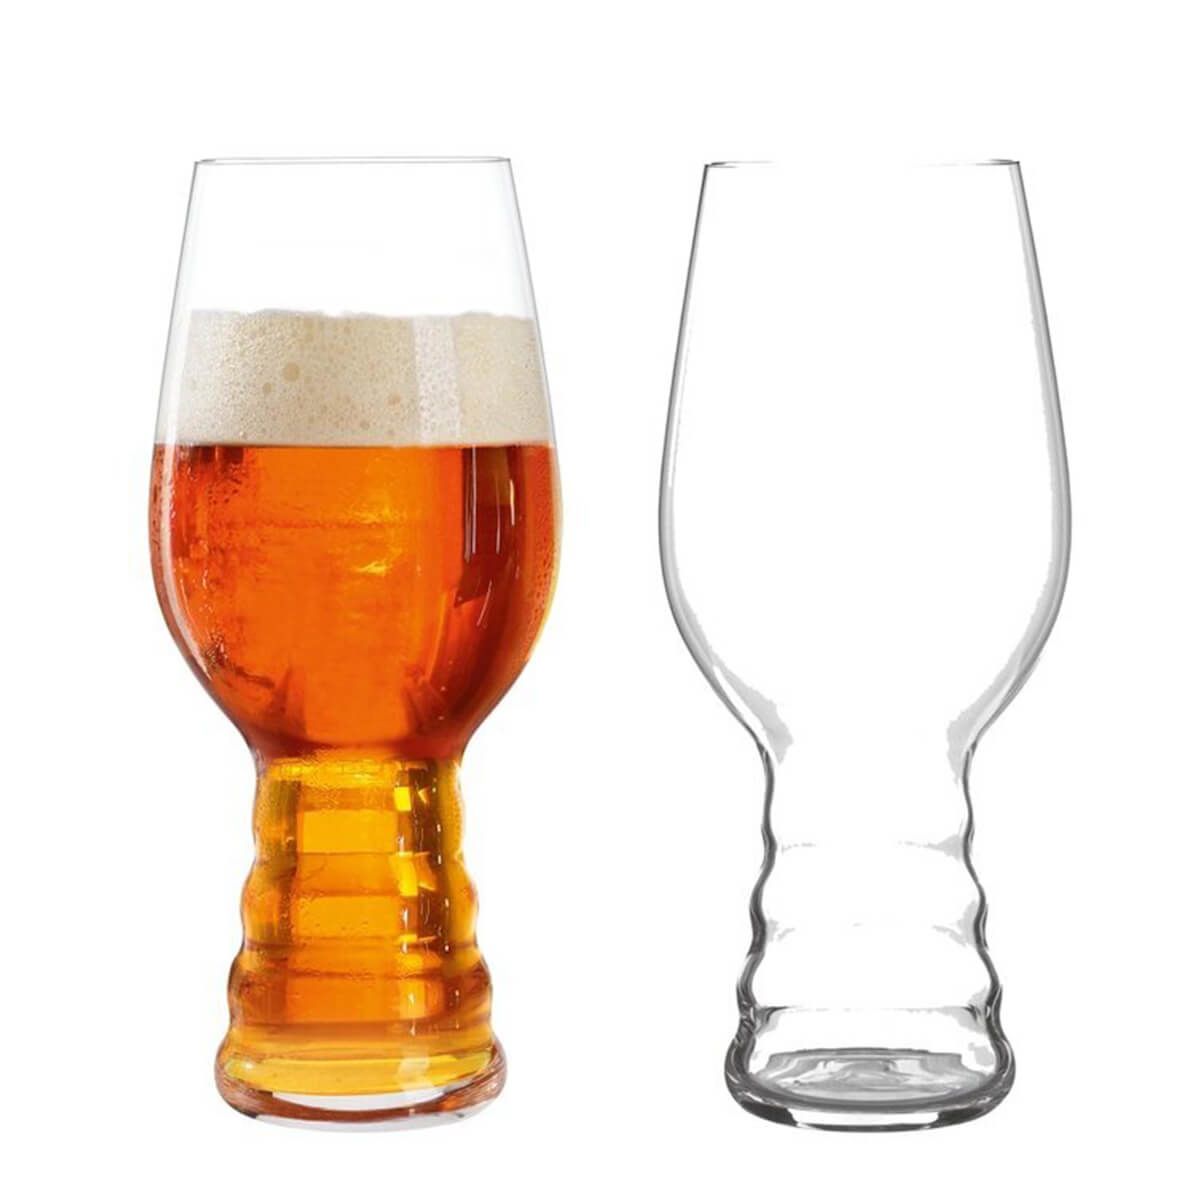 IPA Beer Glass